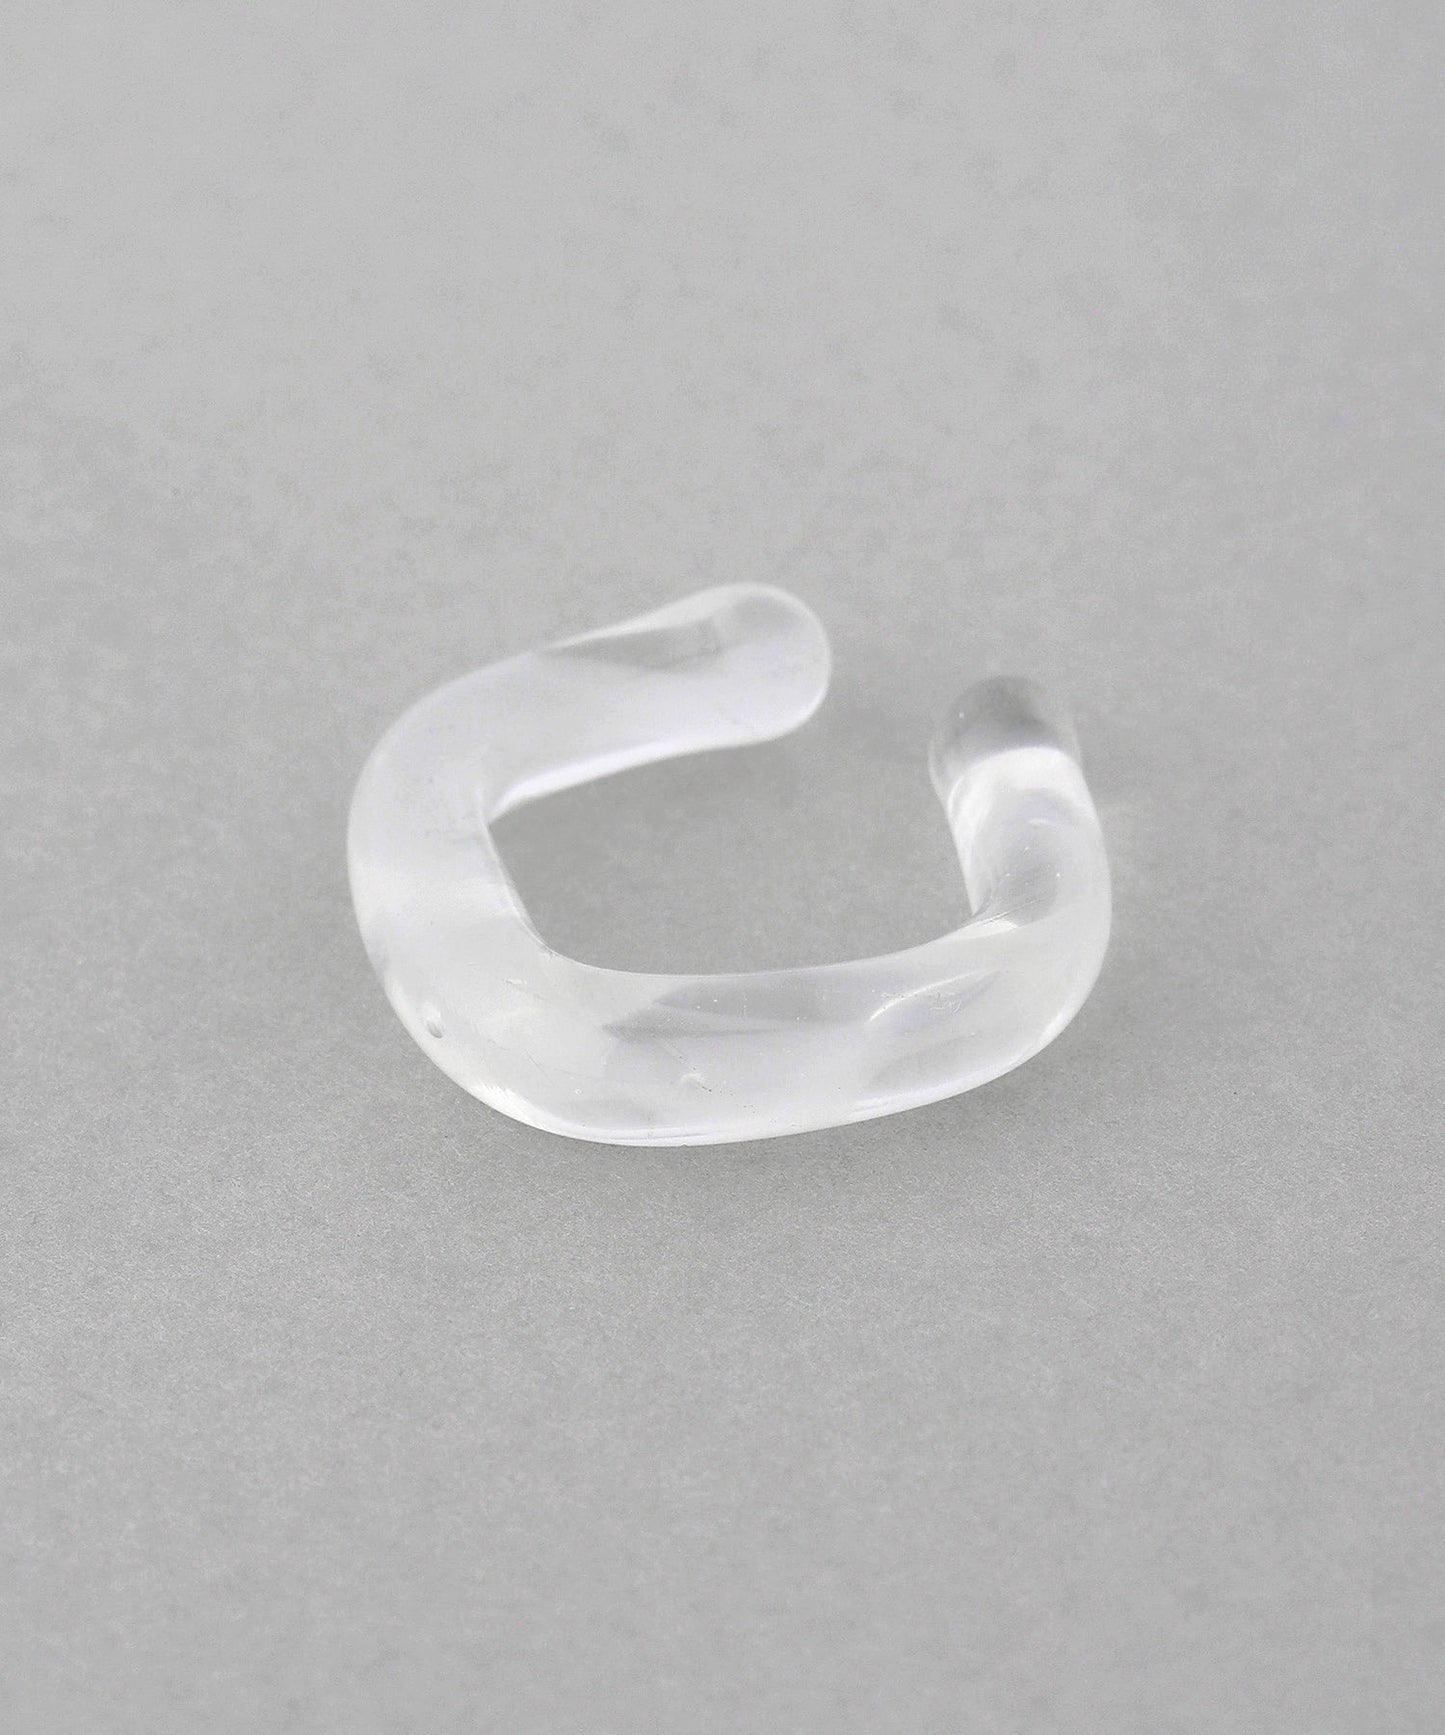 Glass Ear Cuff [Ownideal]